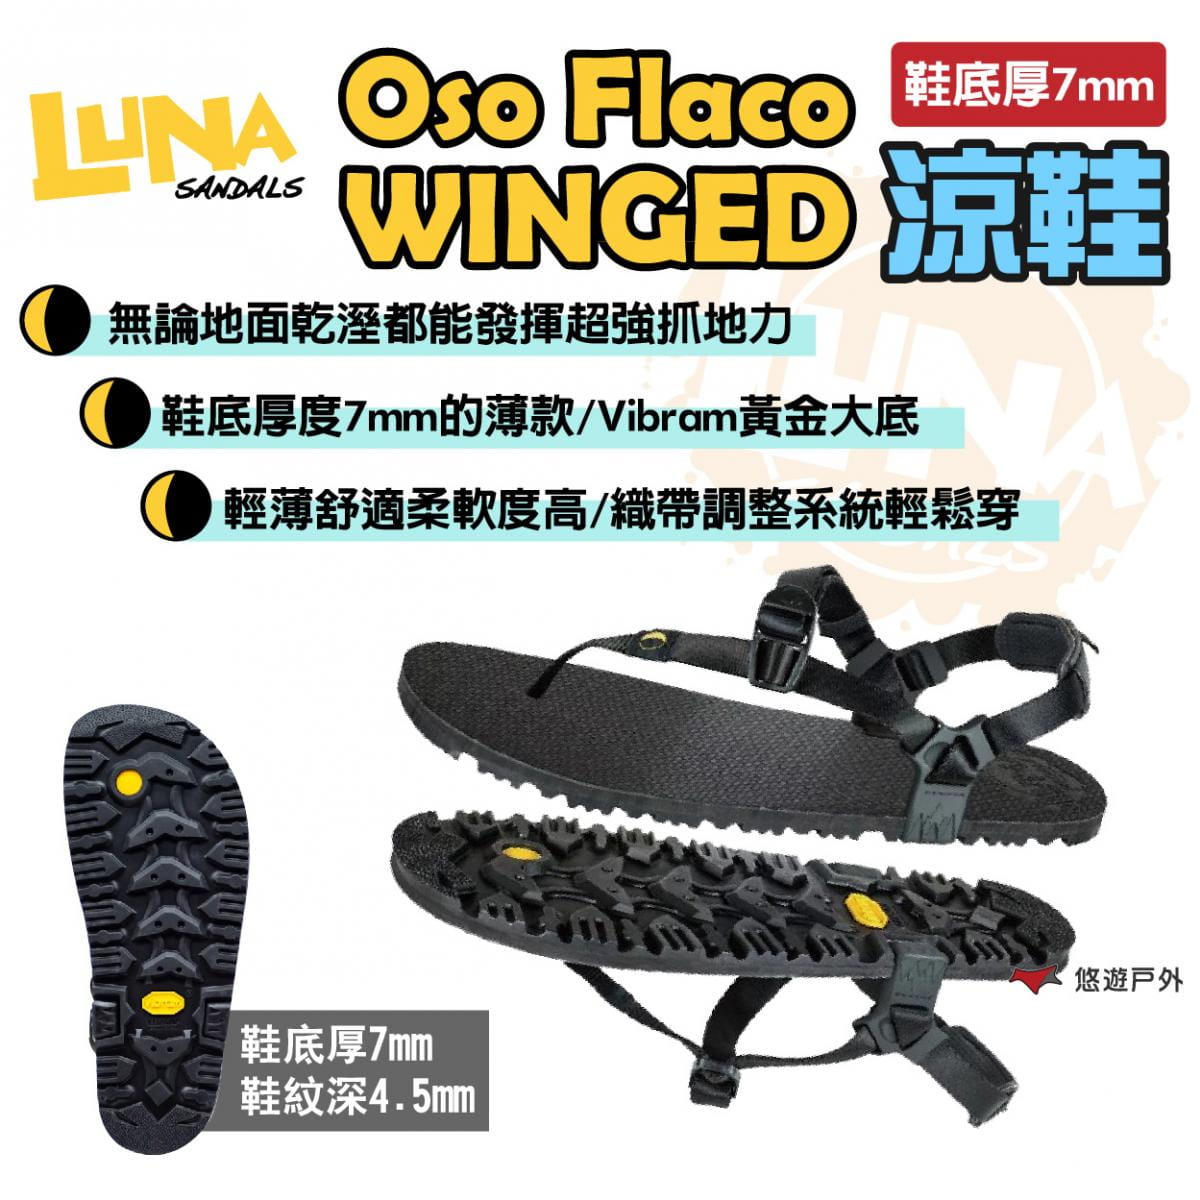 【Luna Sandals】Oso Flaco Winged 涼鞋 7mm款 悠遊戶外 1